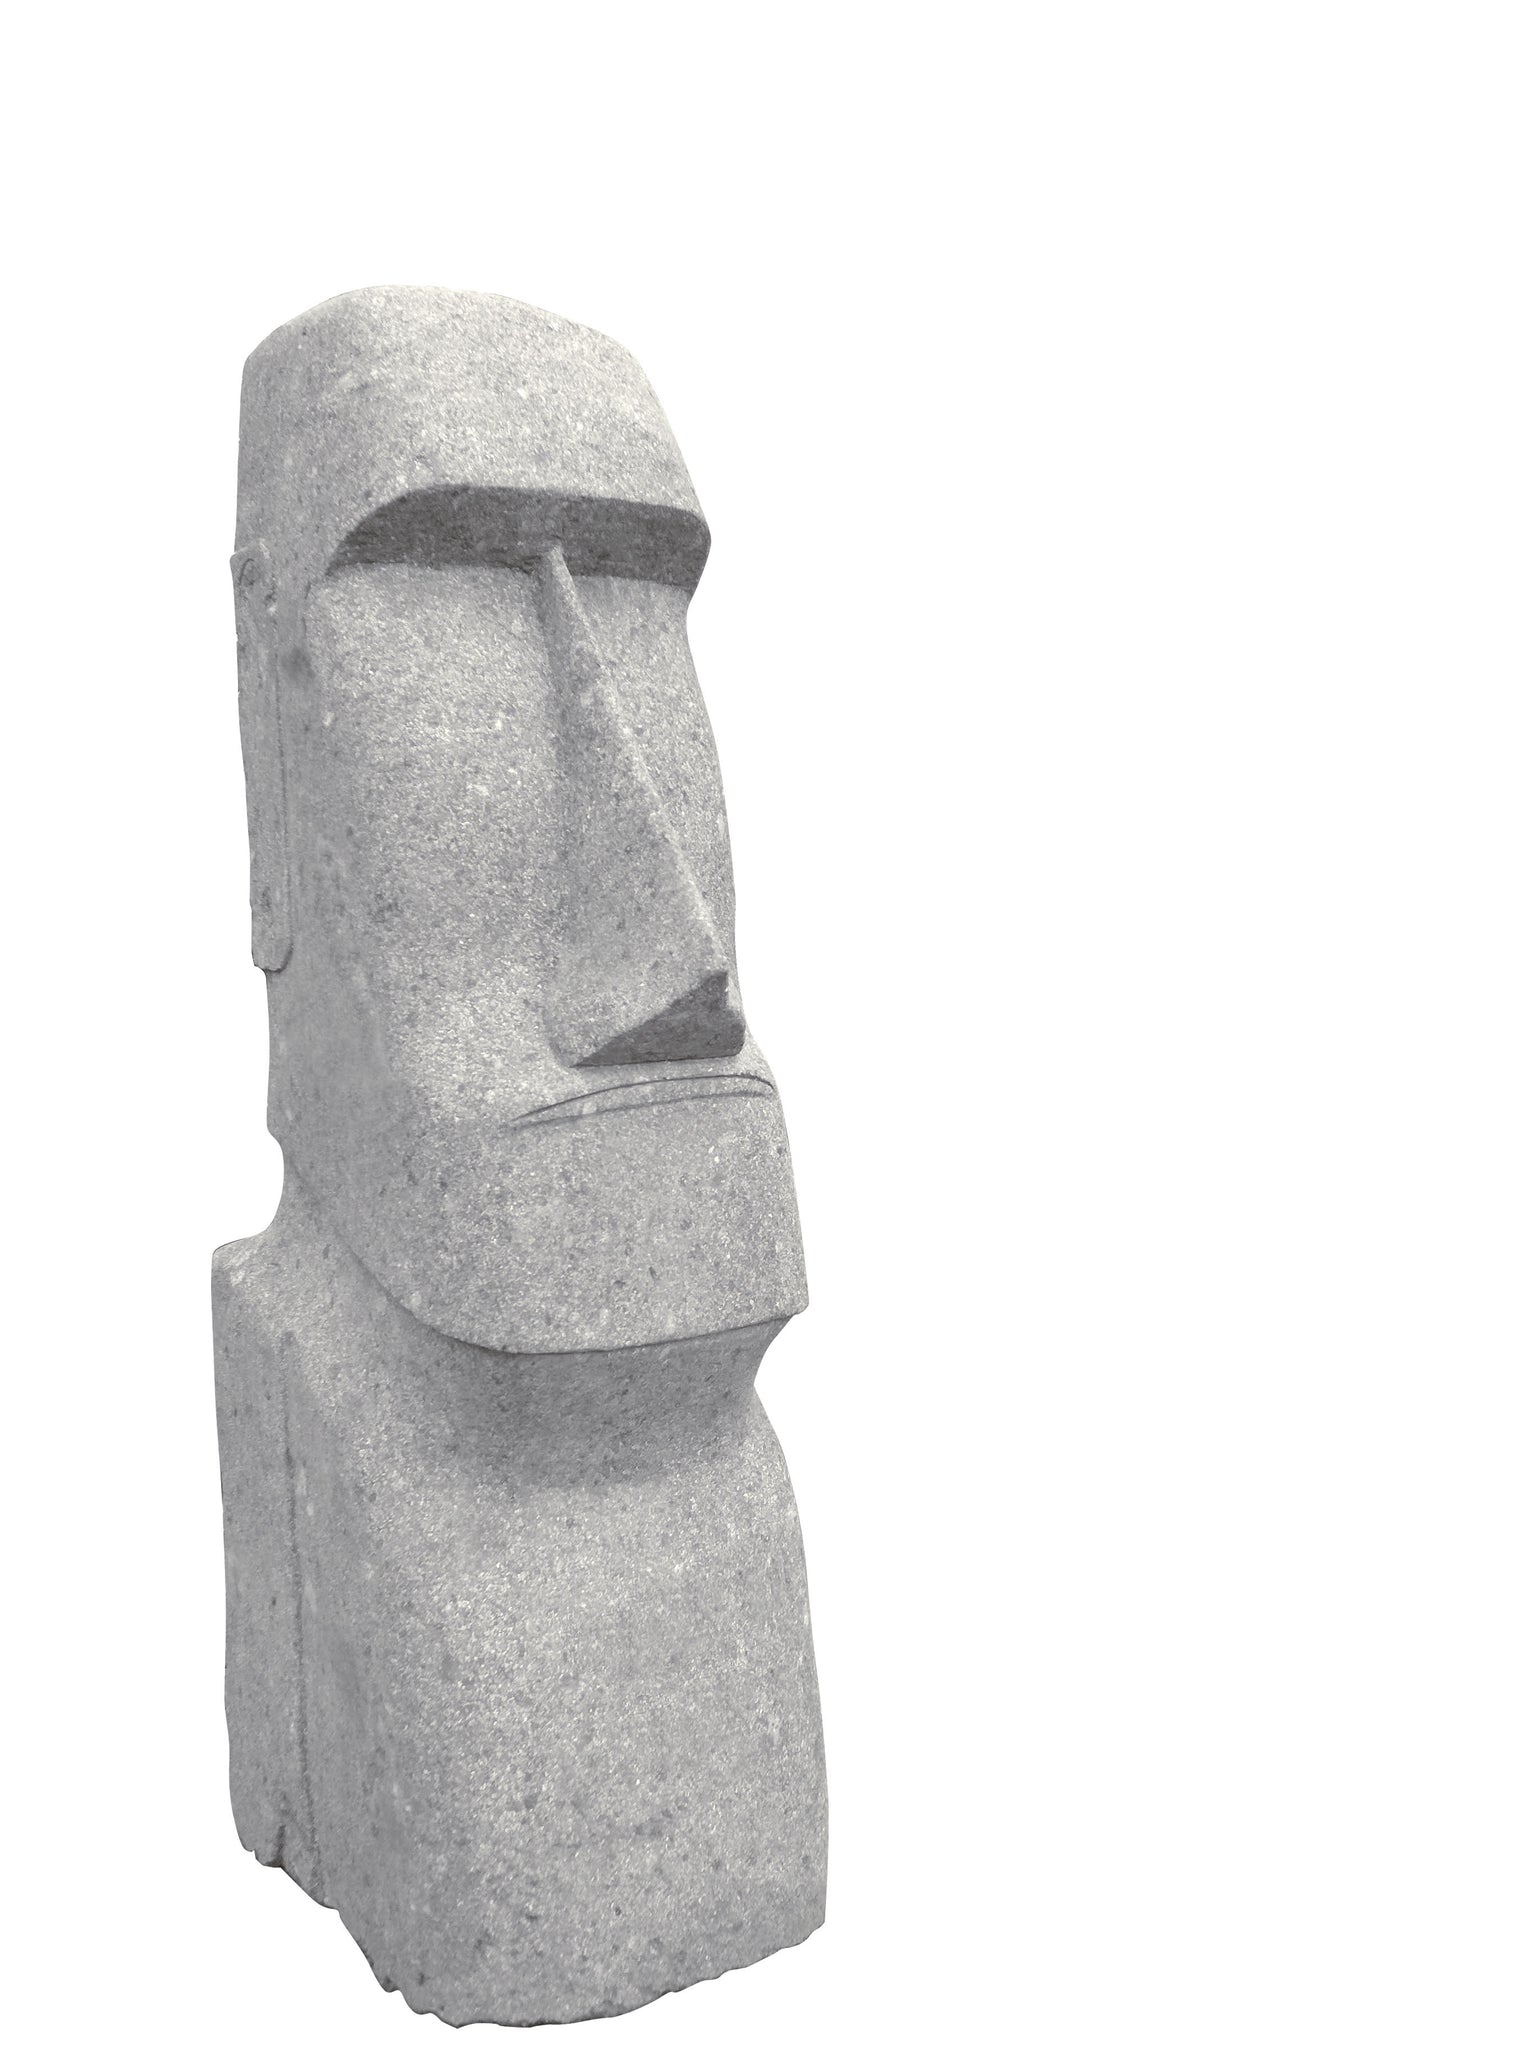 Easter Island Statue Head Heads Garden Moai Statues Stone